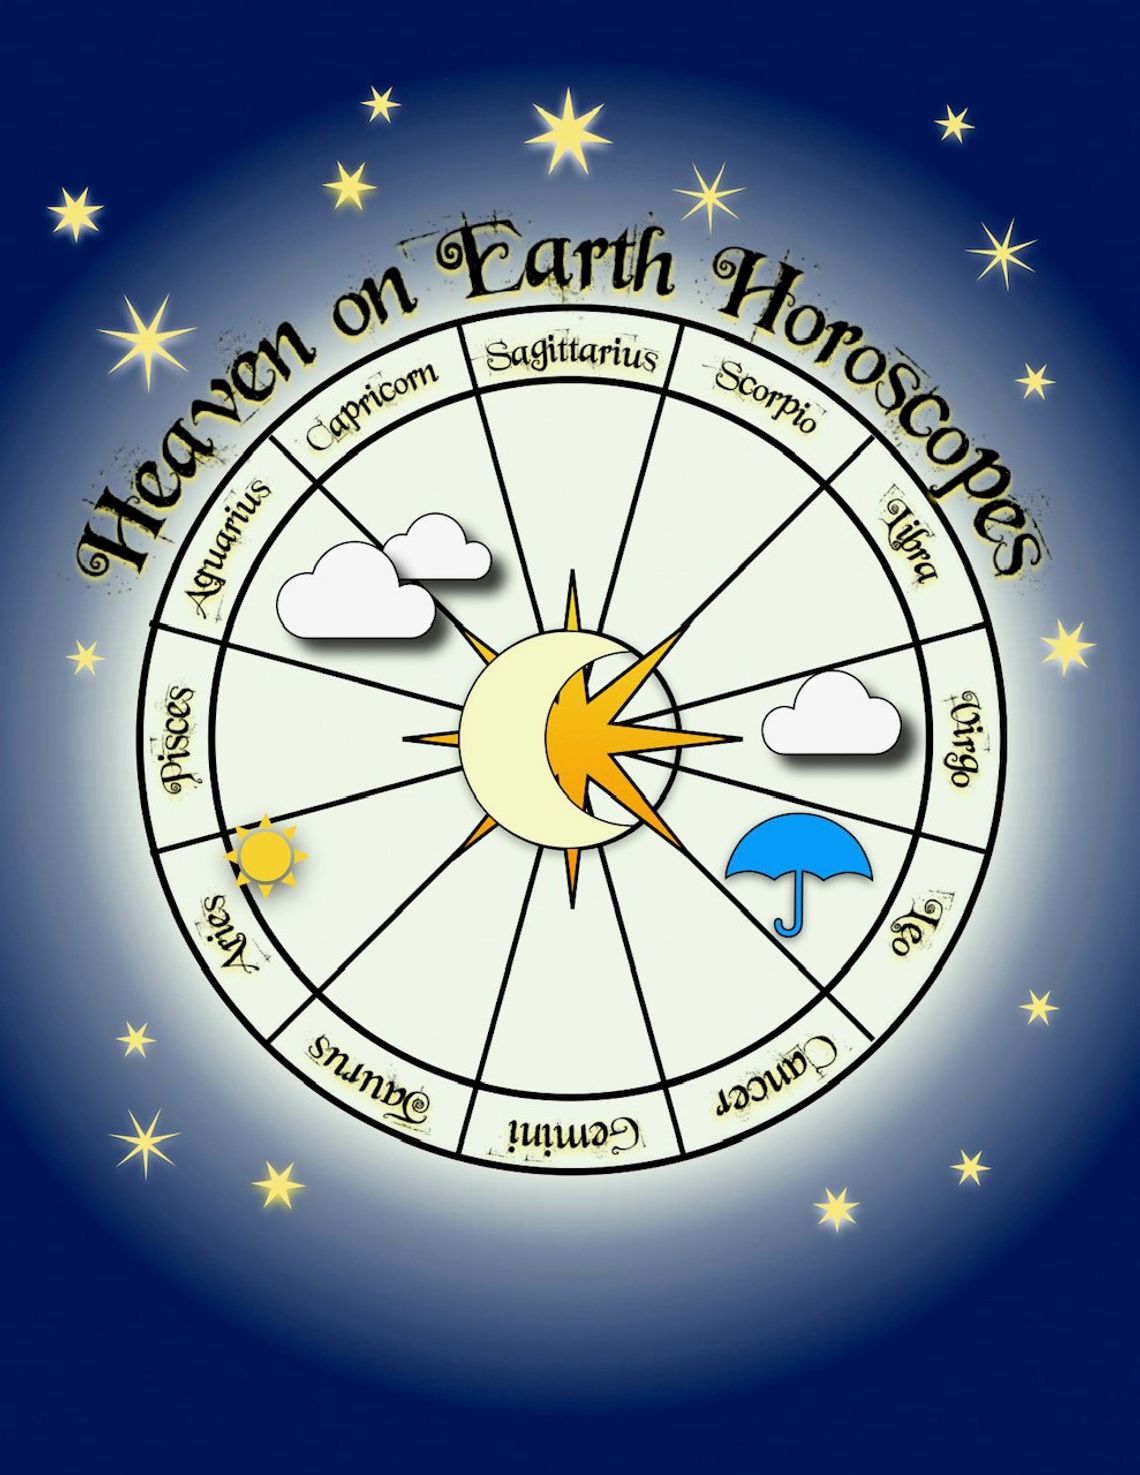 Heaven on Earth Horoscopes: 